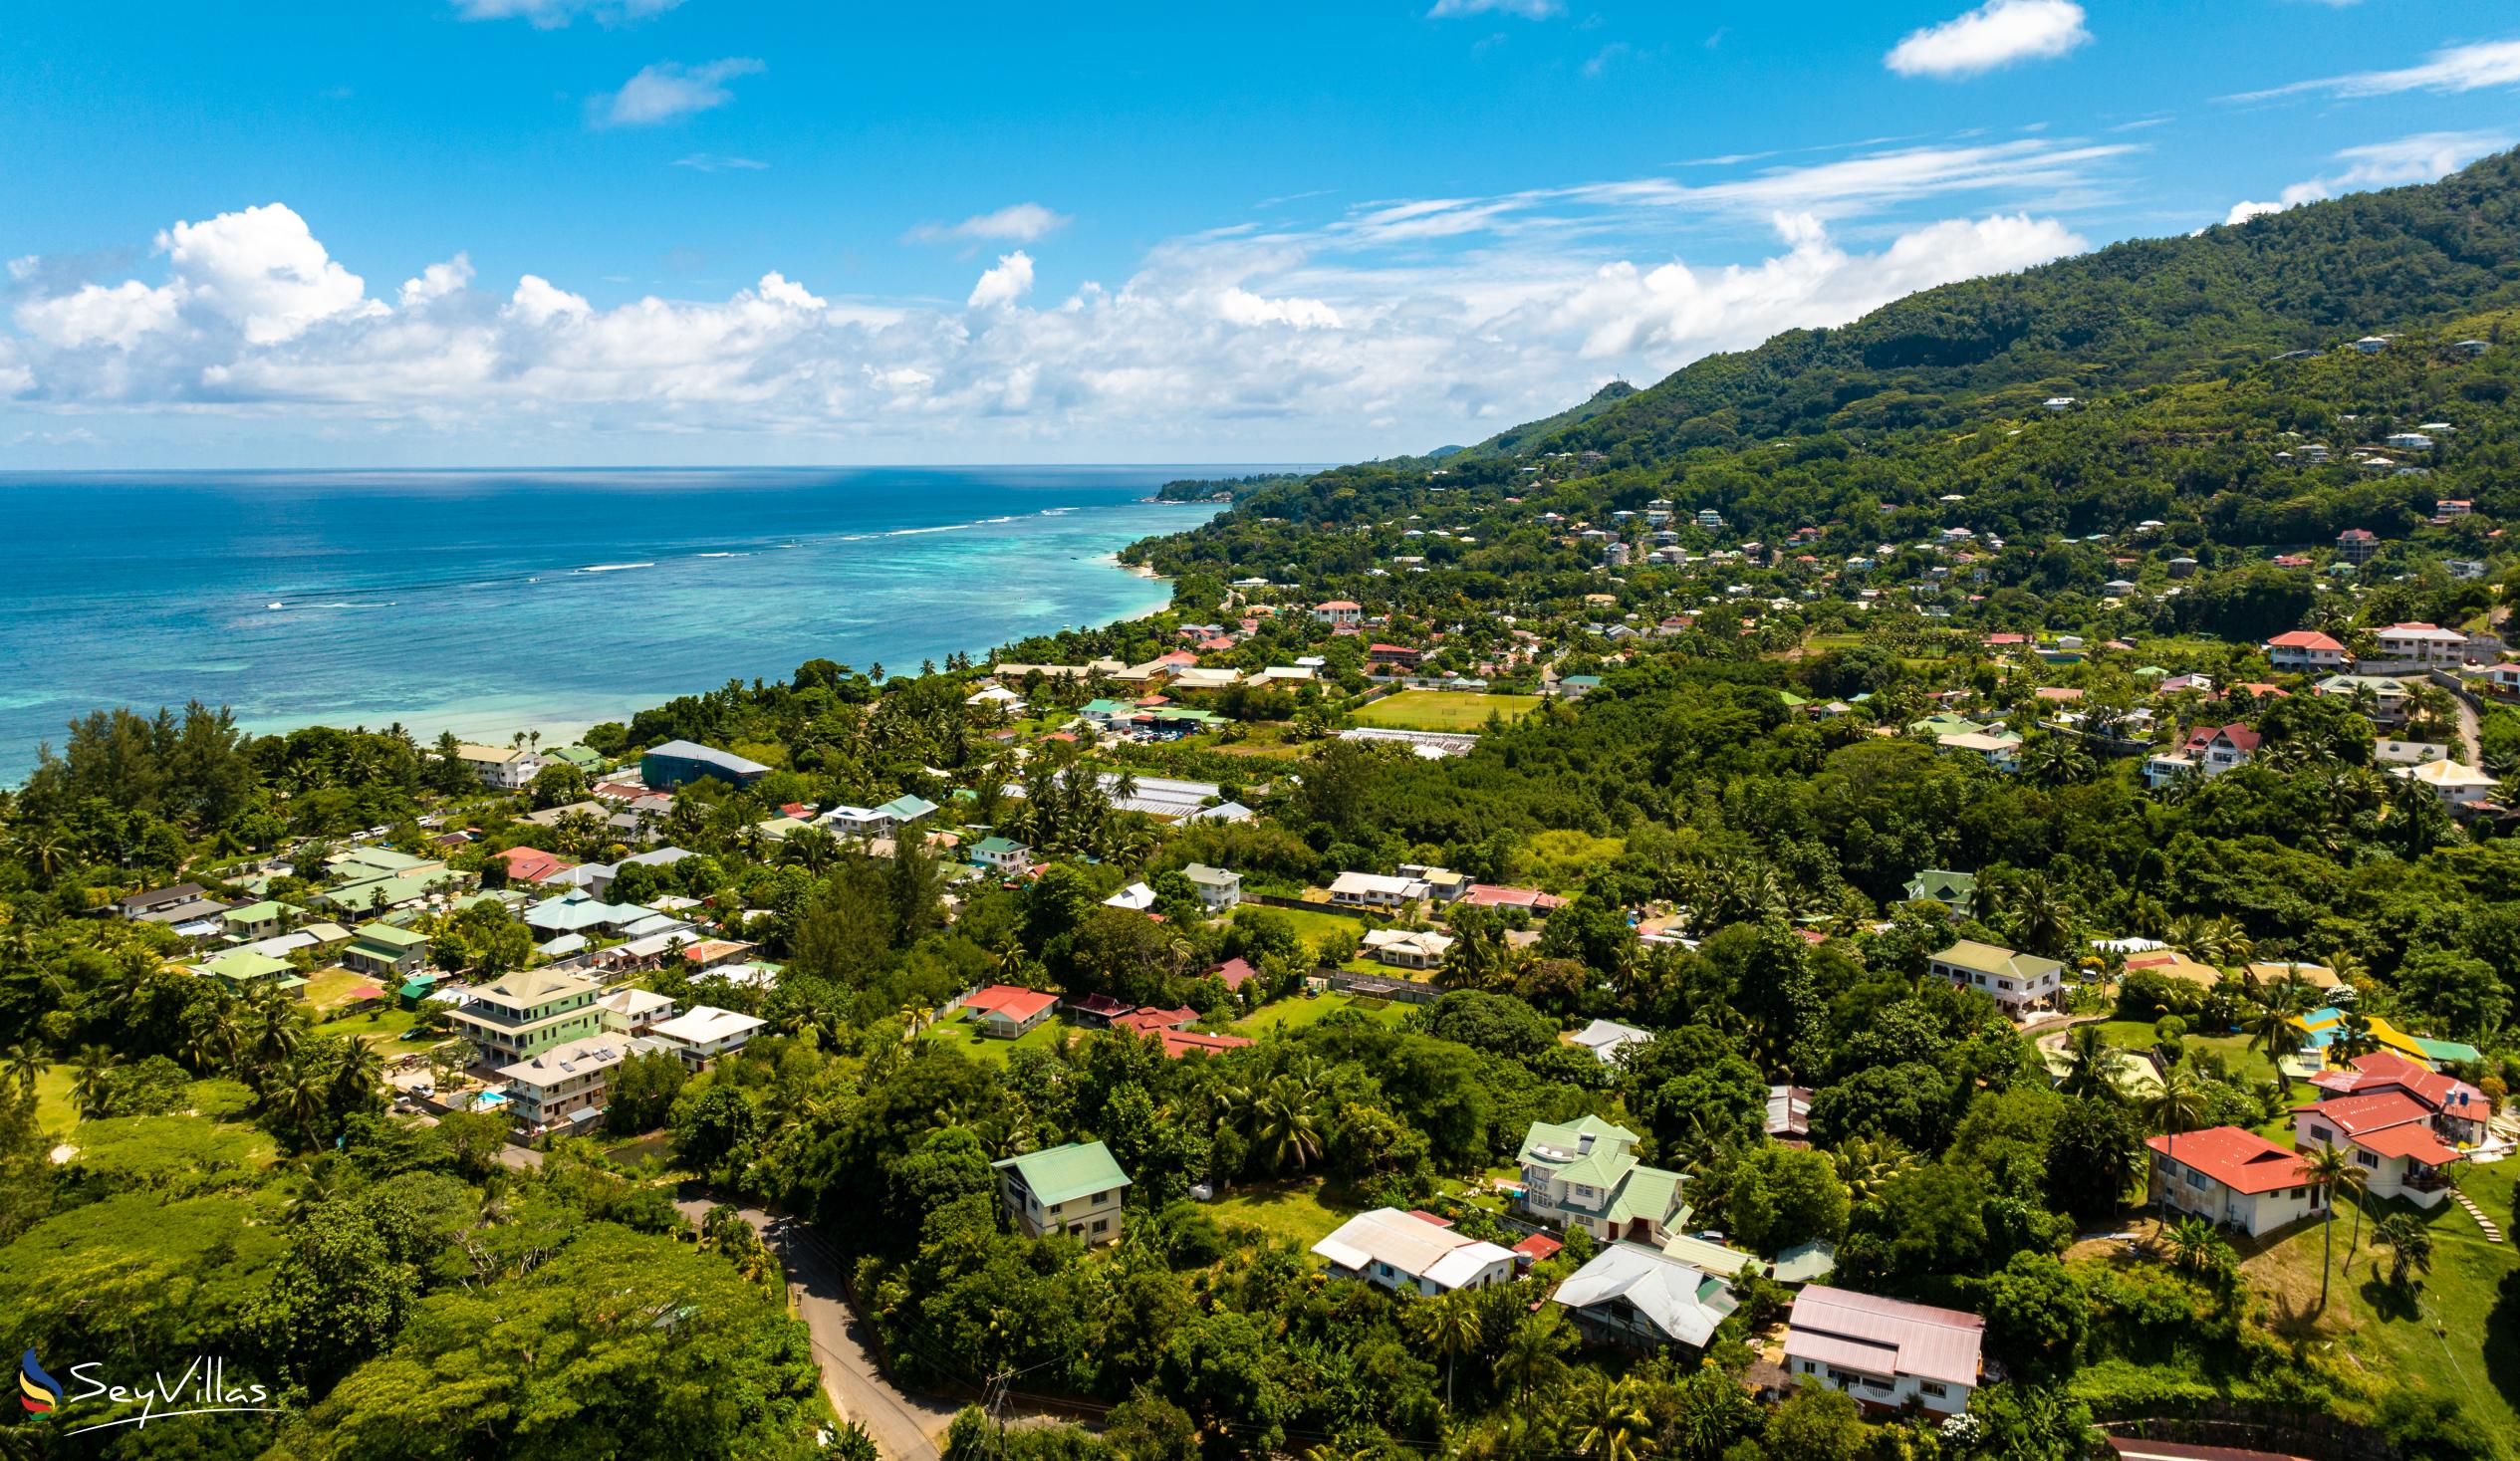 Foto 22: JAIDSS Holiday Apartments - Posizione - Mahé (Seychelles)